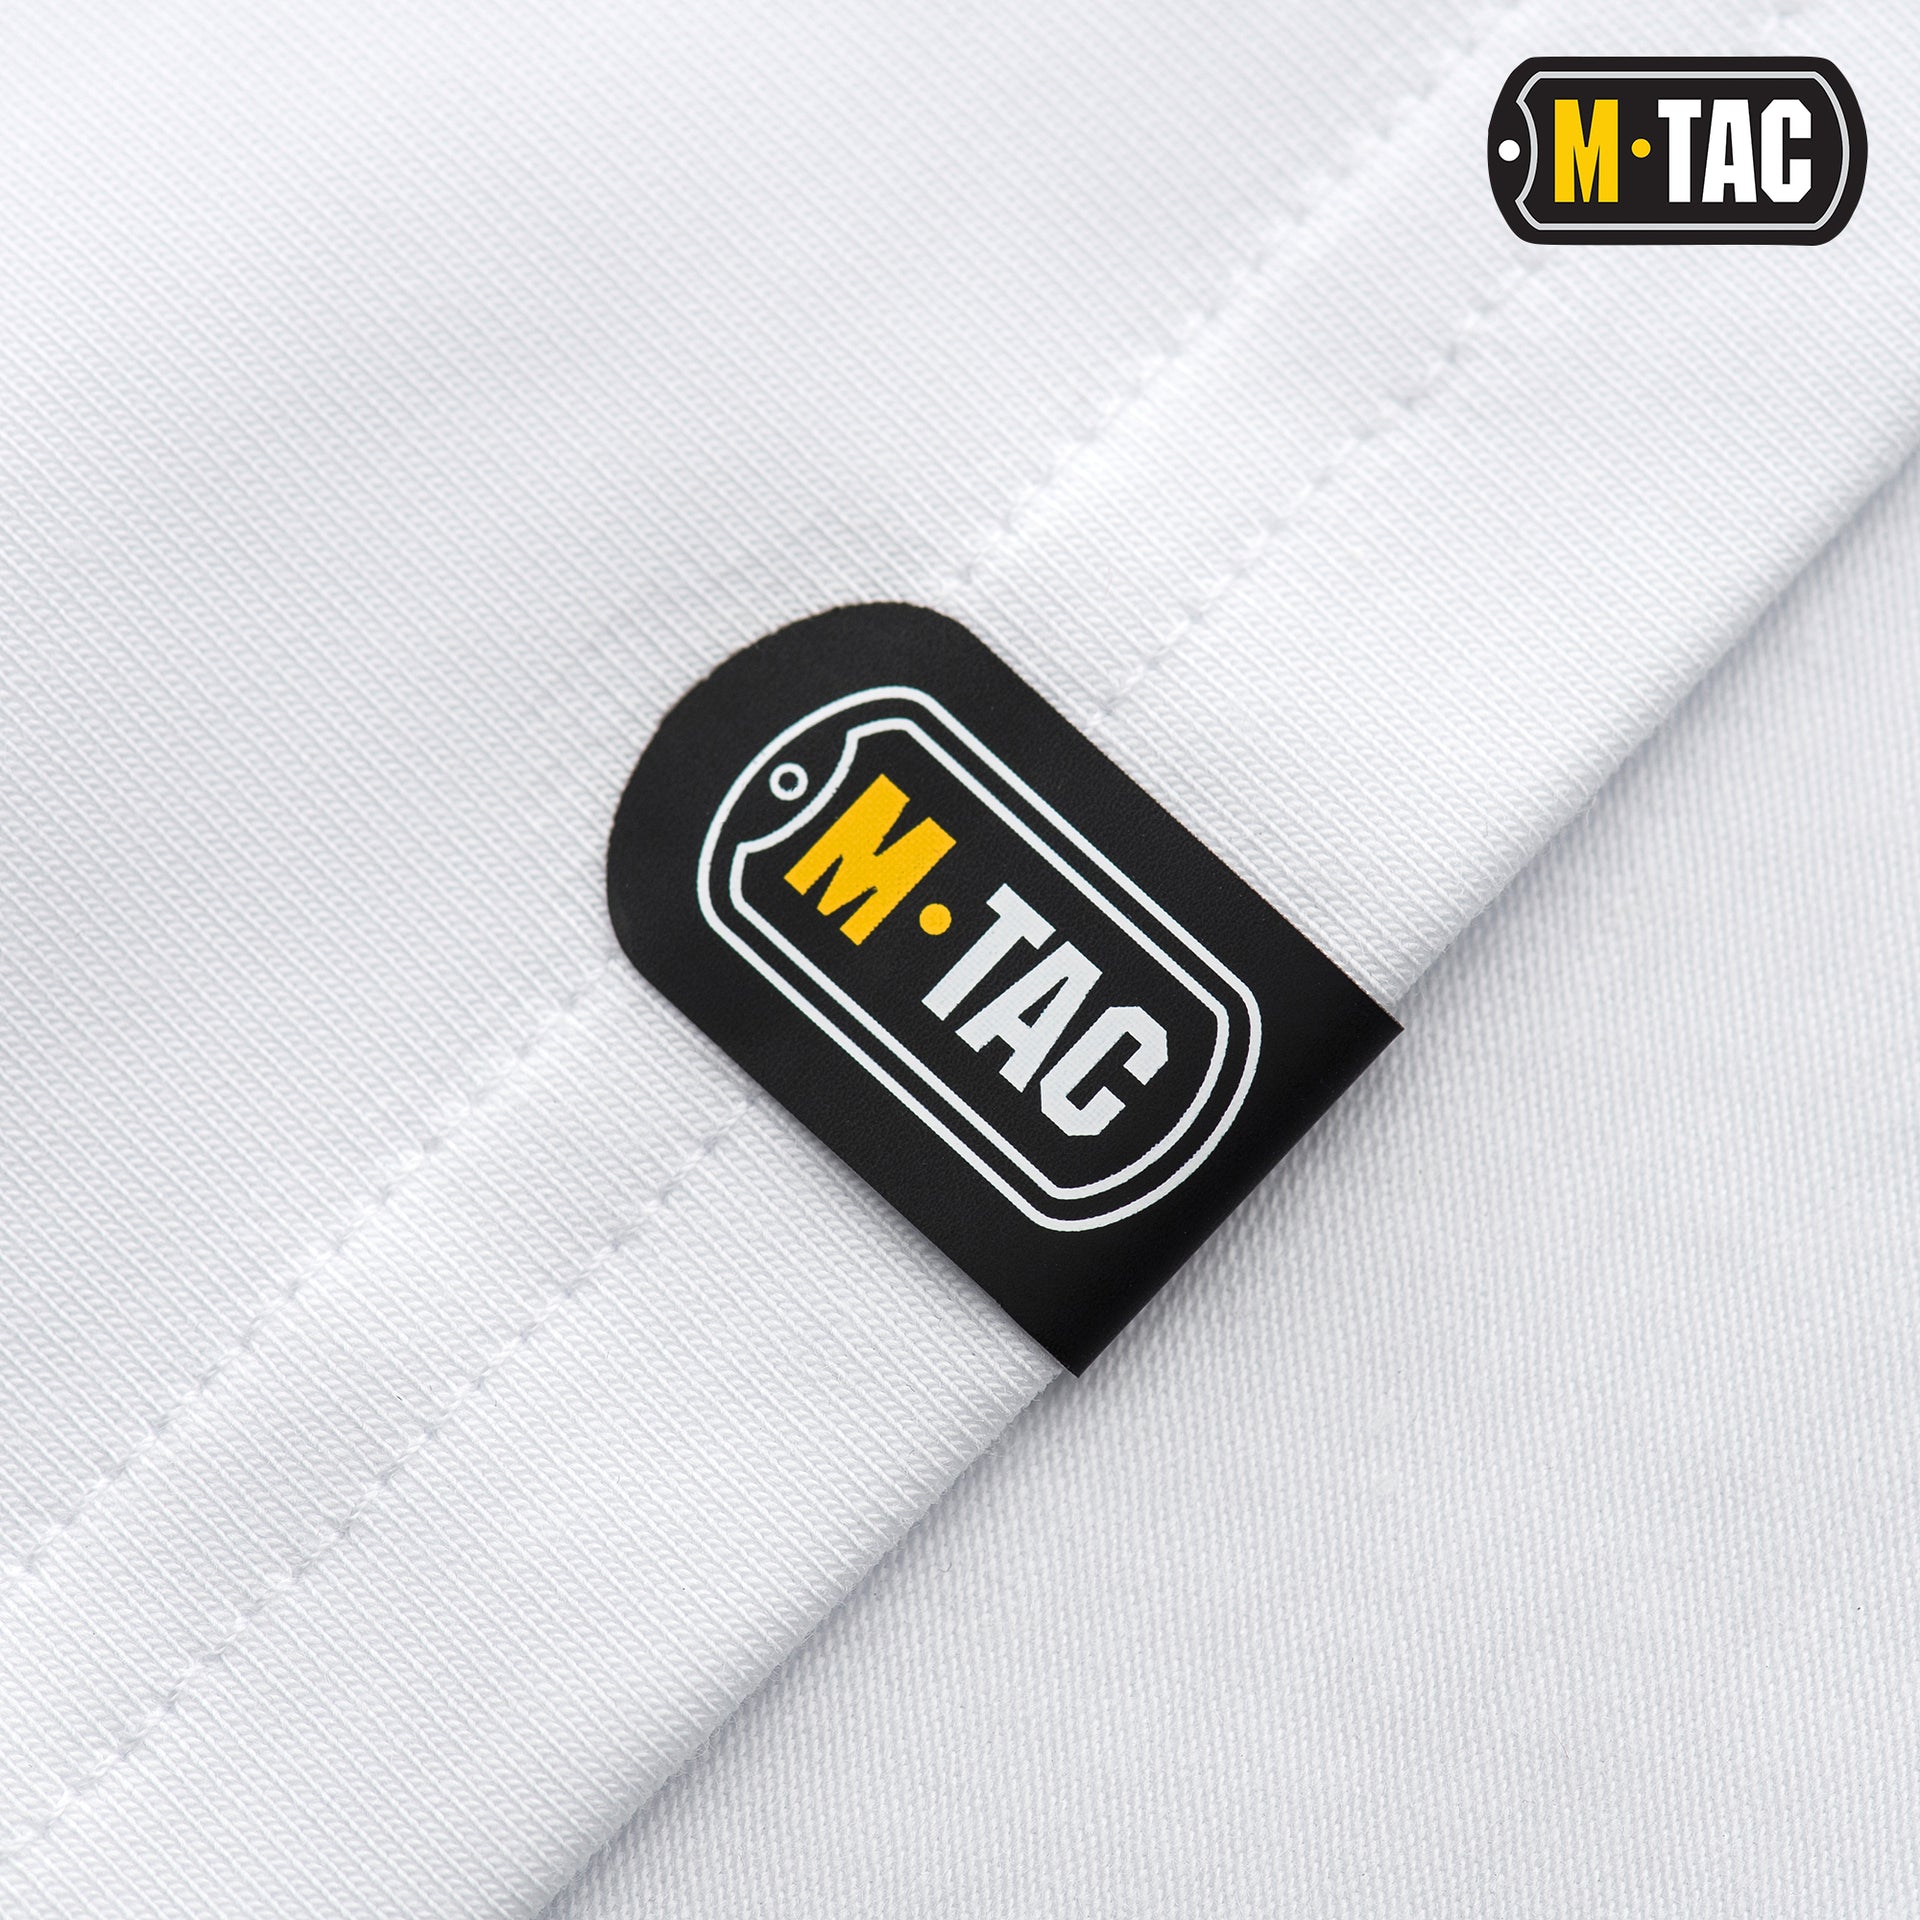 M-Tac T-shirt 93/7